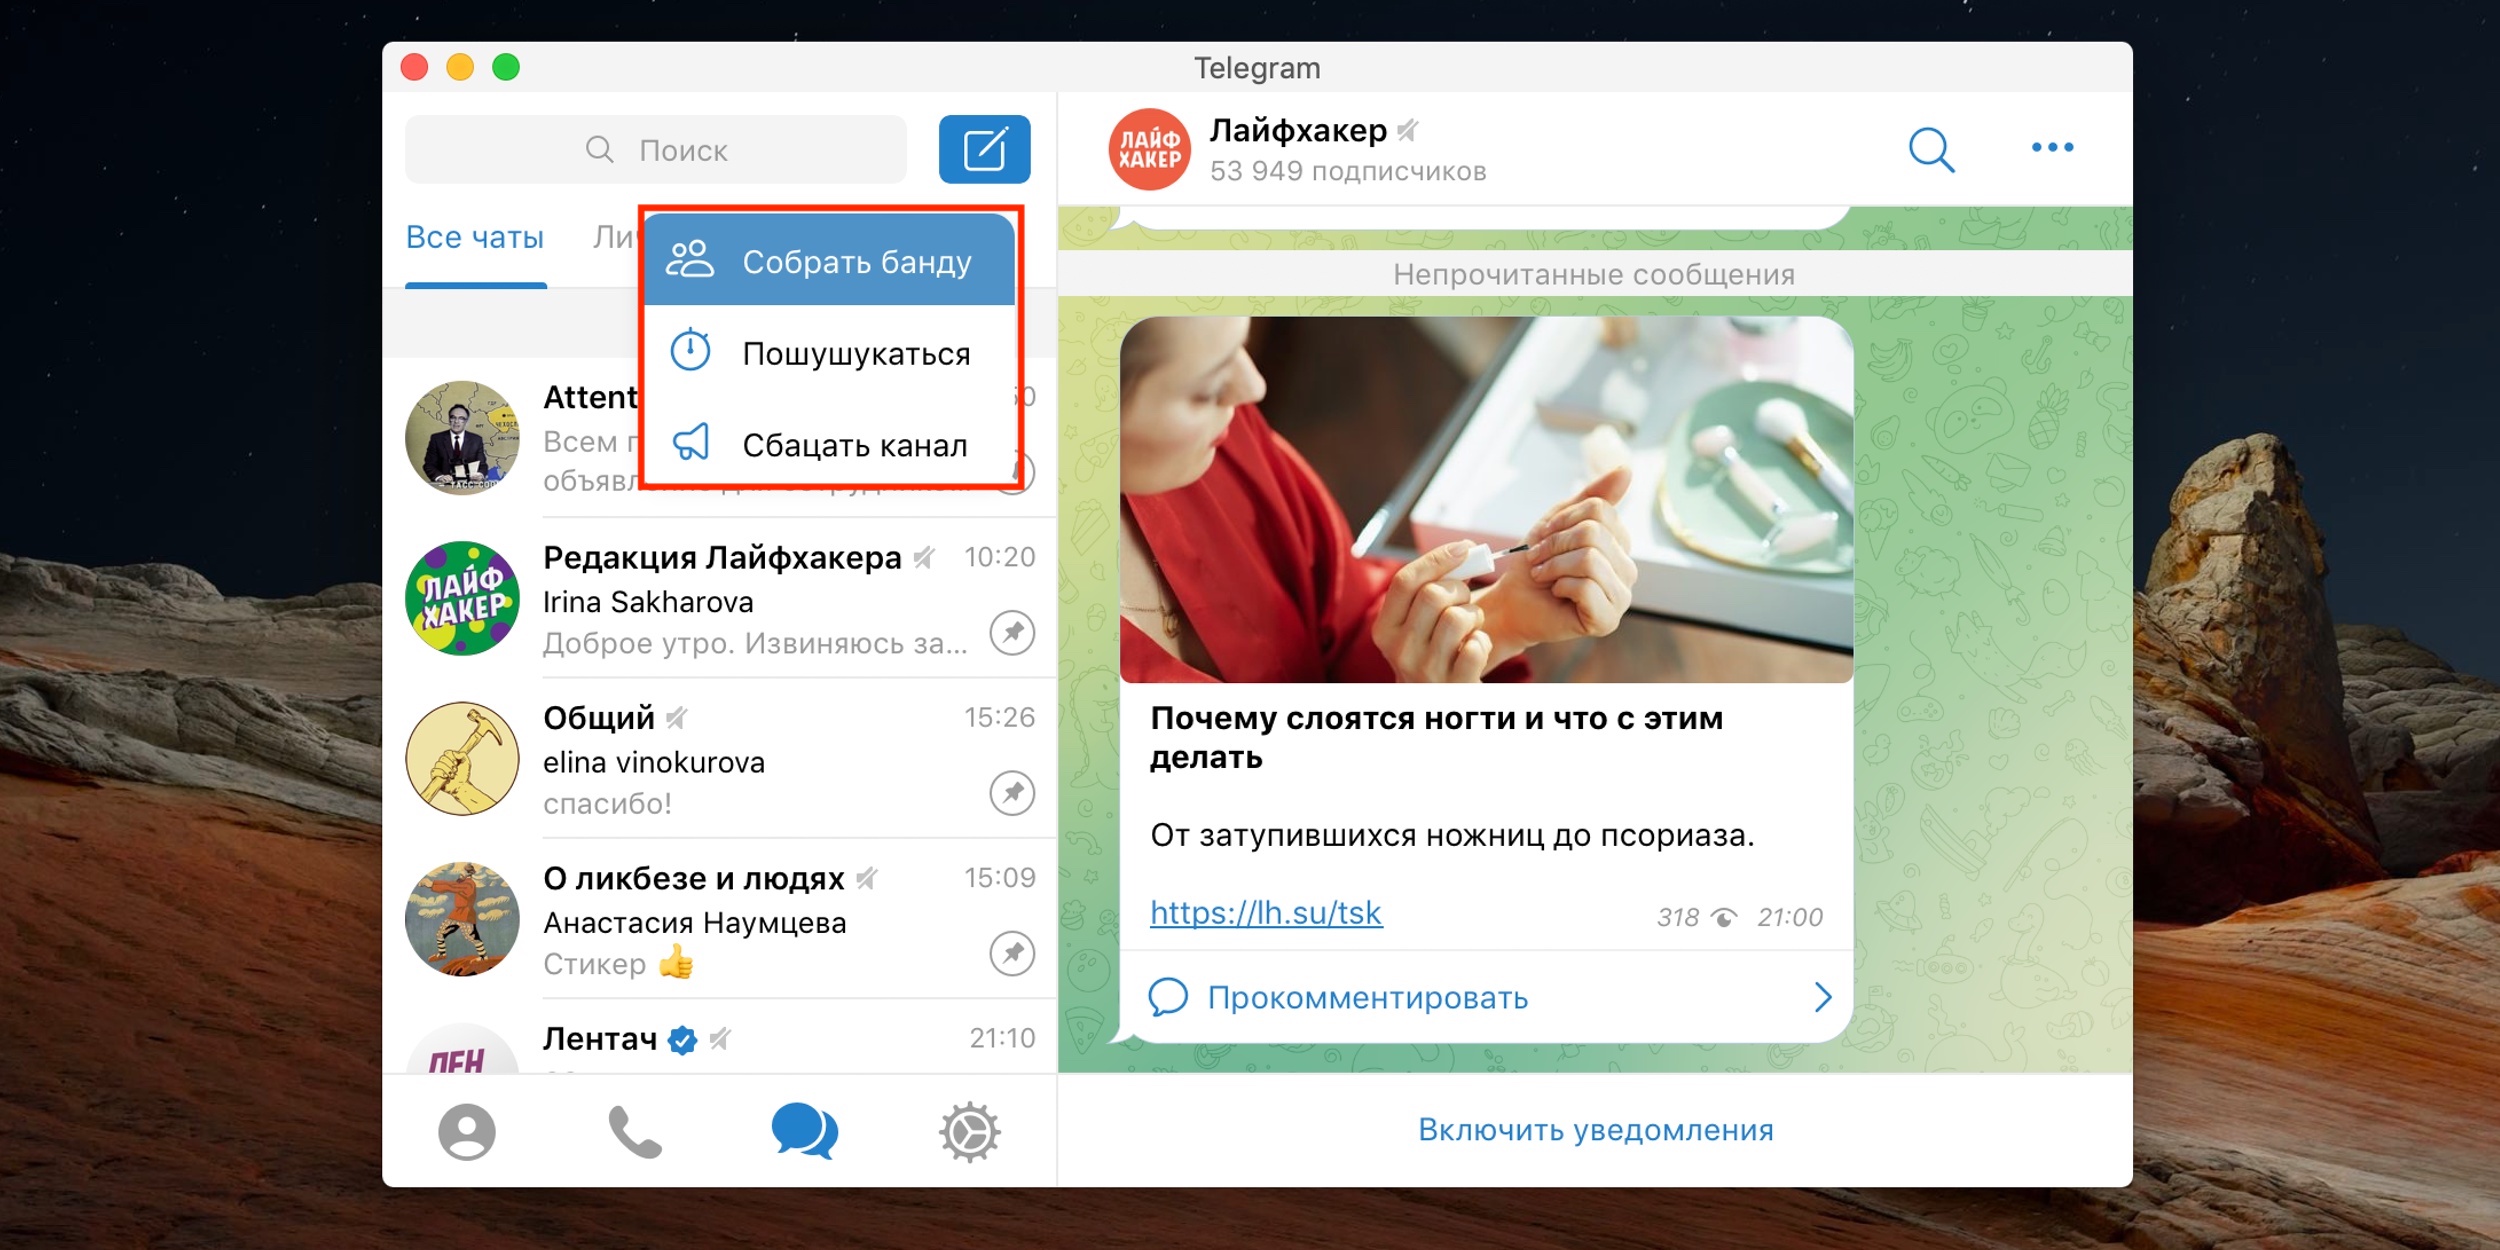 Телеграмм перевести на русский язык на андроиде фото 32